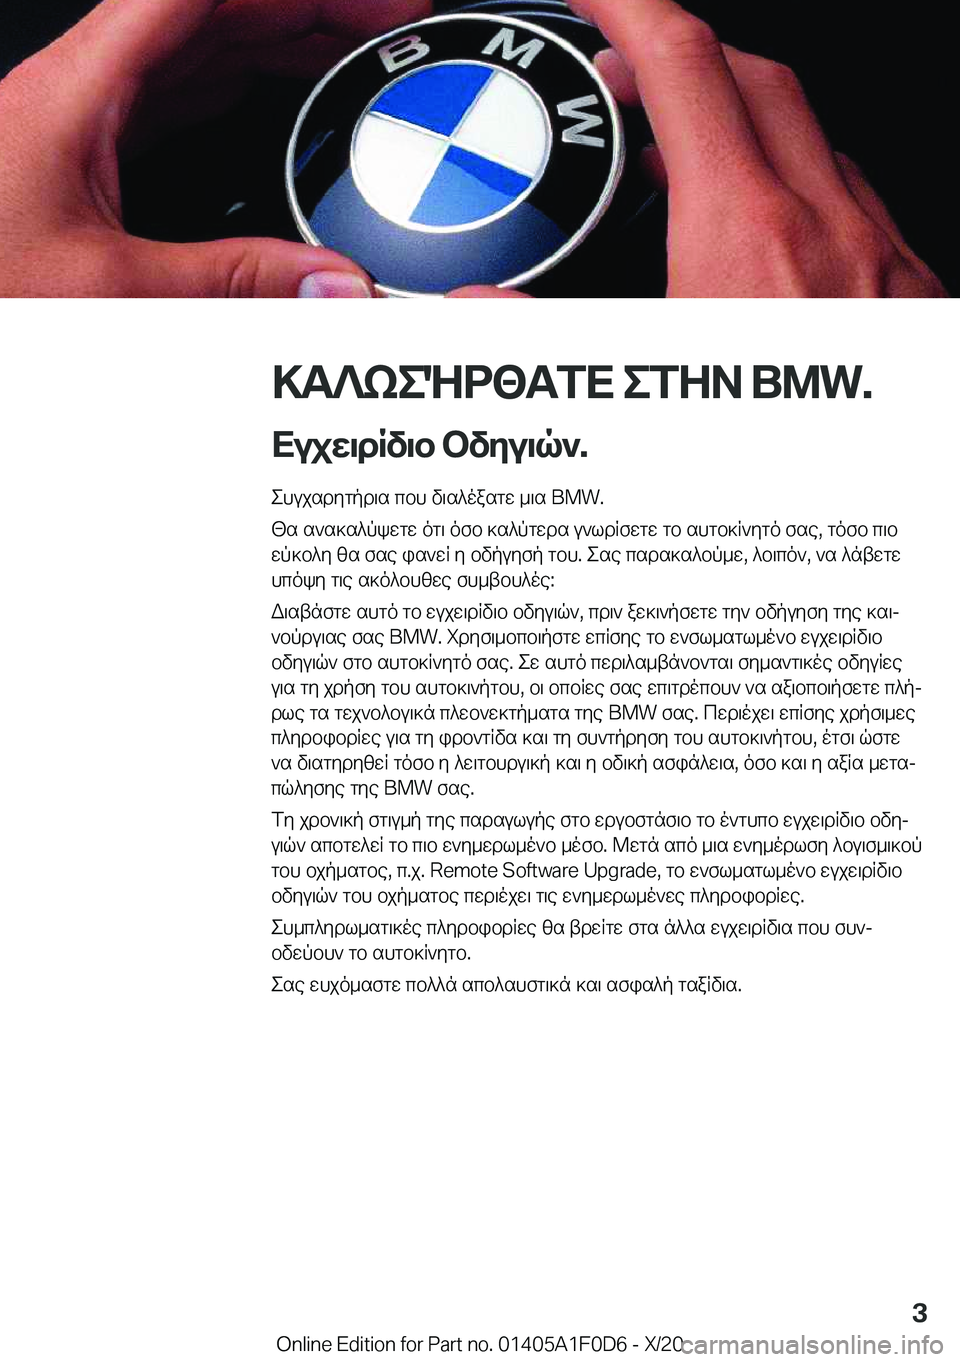 BMW X6 2021  ΟΔΗΓΌΣ ΧΡΉΣΗΣ (in Greek) >T?keNd<TfX�efZA��B�M�W�.
Xujw\dRv\b�bvyu\q`�. ehujsdygpd\s�cbh�v\s^oasgw�_\s��B�M�W�.
[s�s`s]s^pkwgw�og\�ofb�